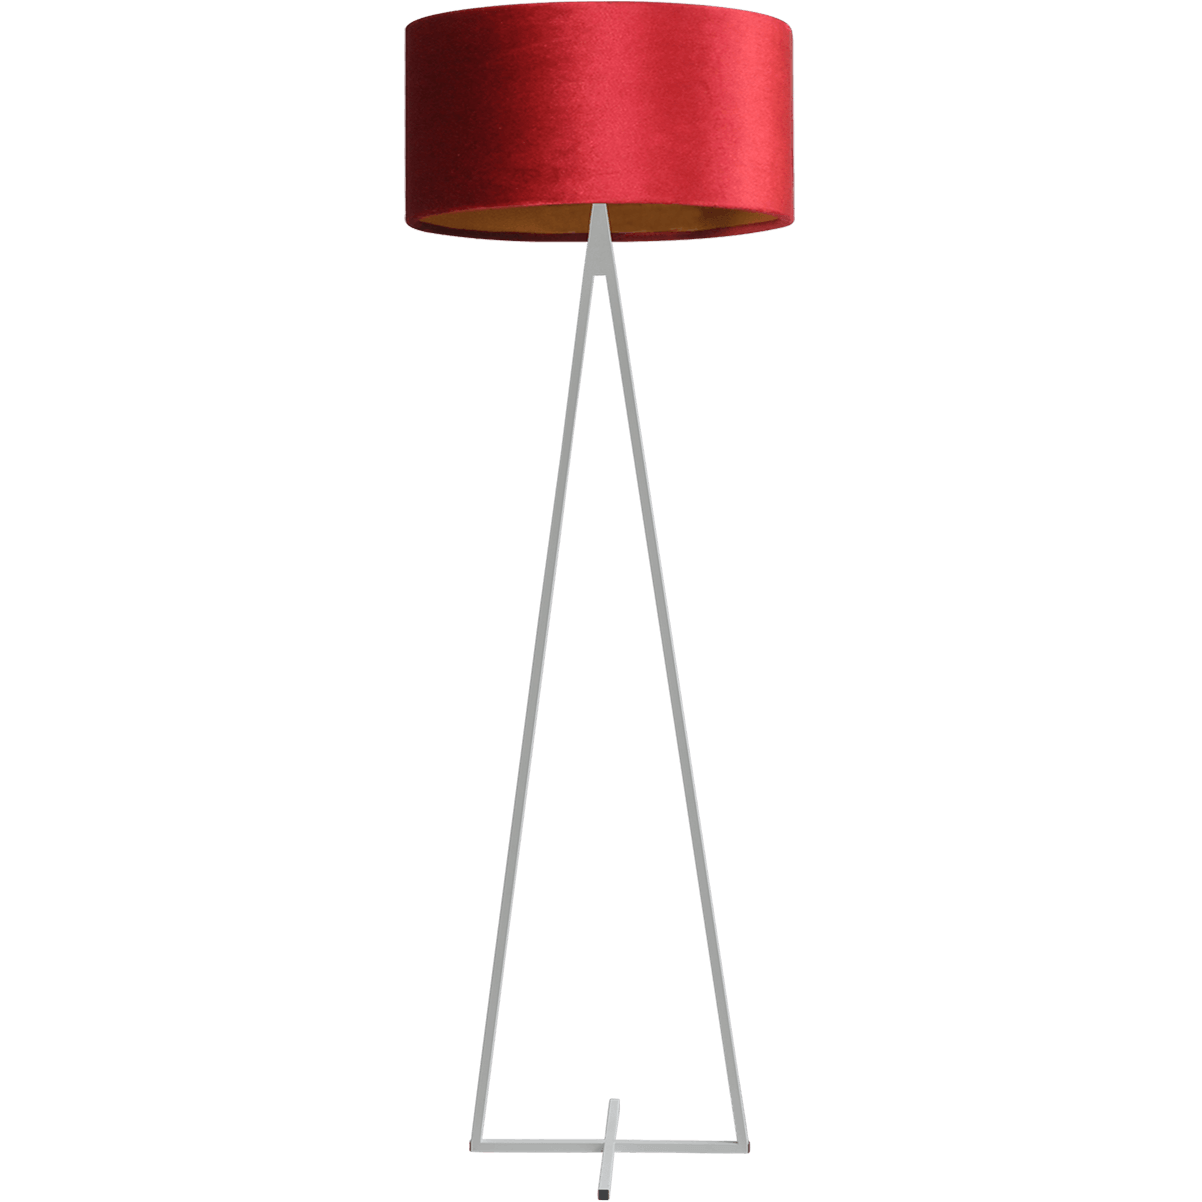 Vloerlamp Cross Triangle wit structuur hoogte 158cm inclusief rode lampenkap Artik red 52/52/25 - MASTERLIGHT